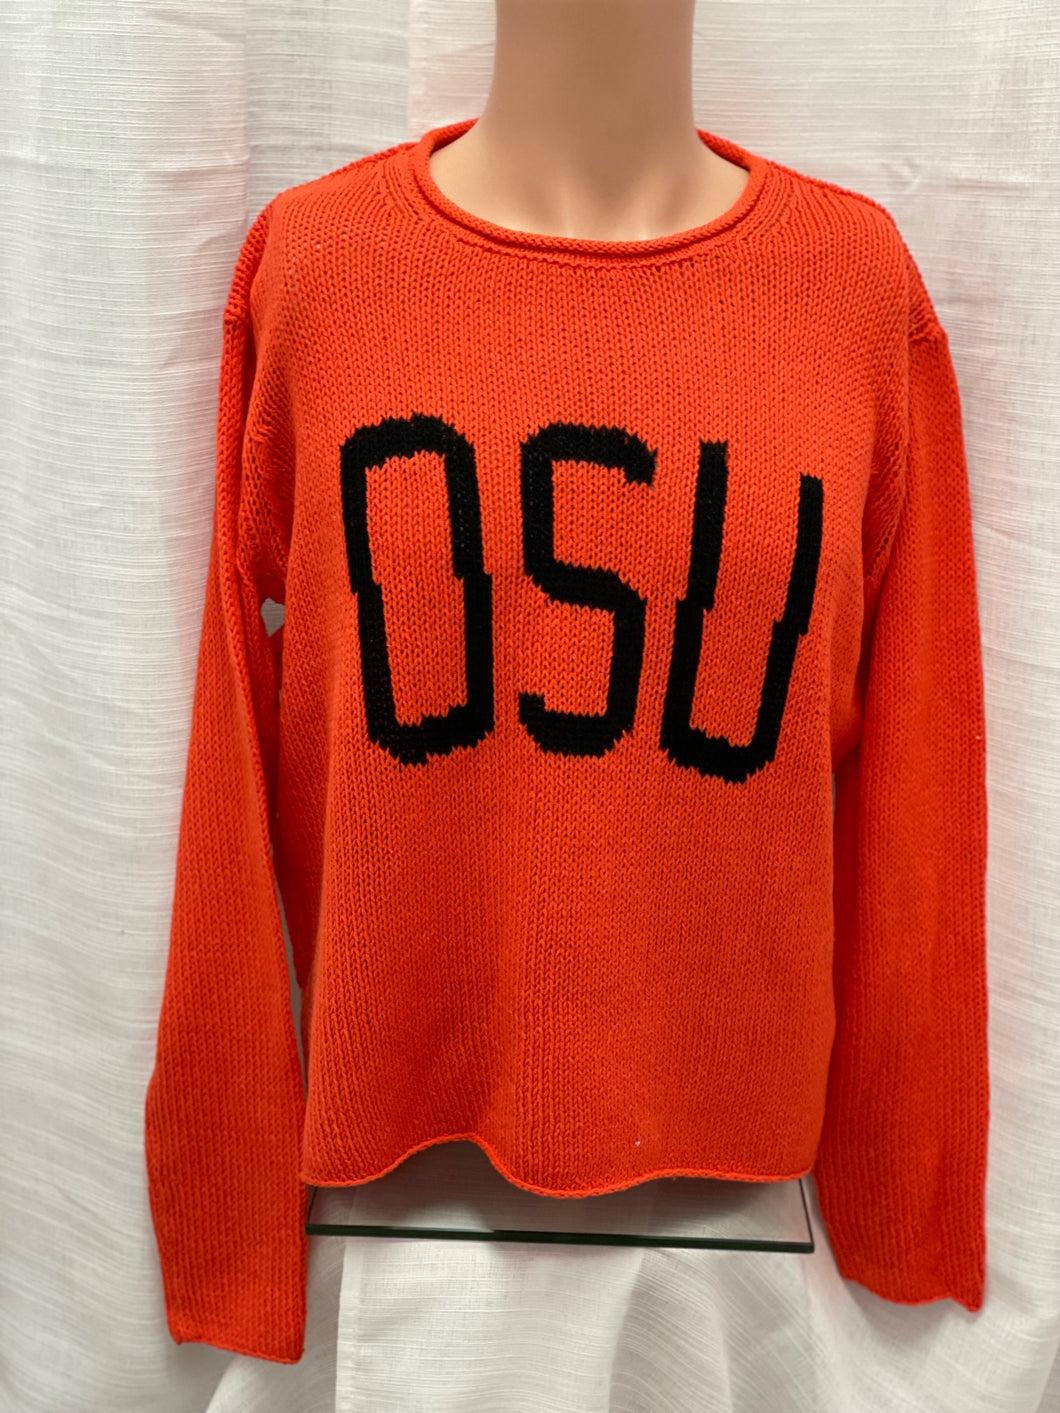 OSU Sweater